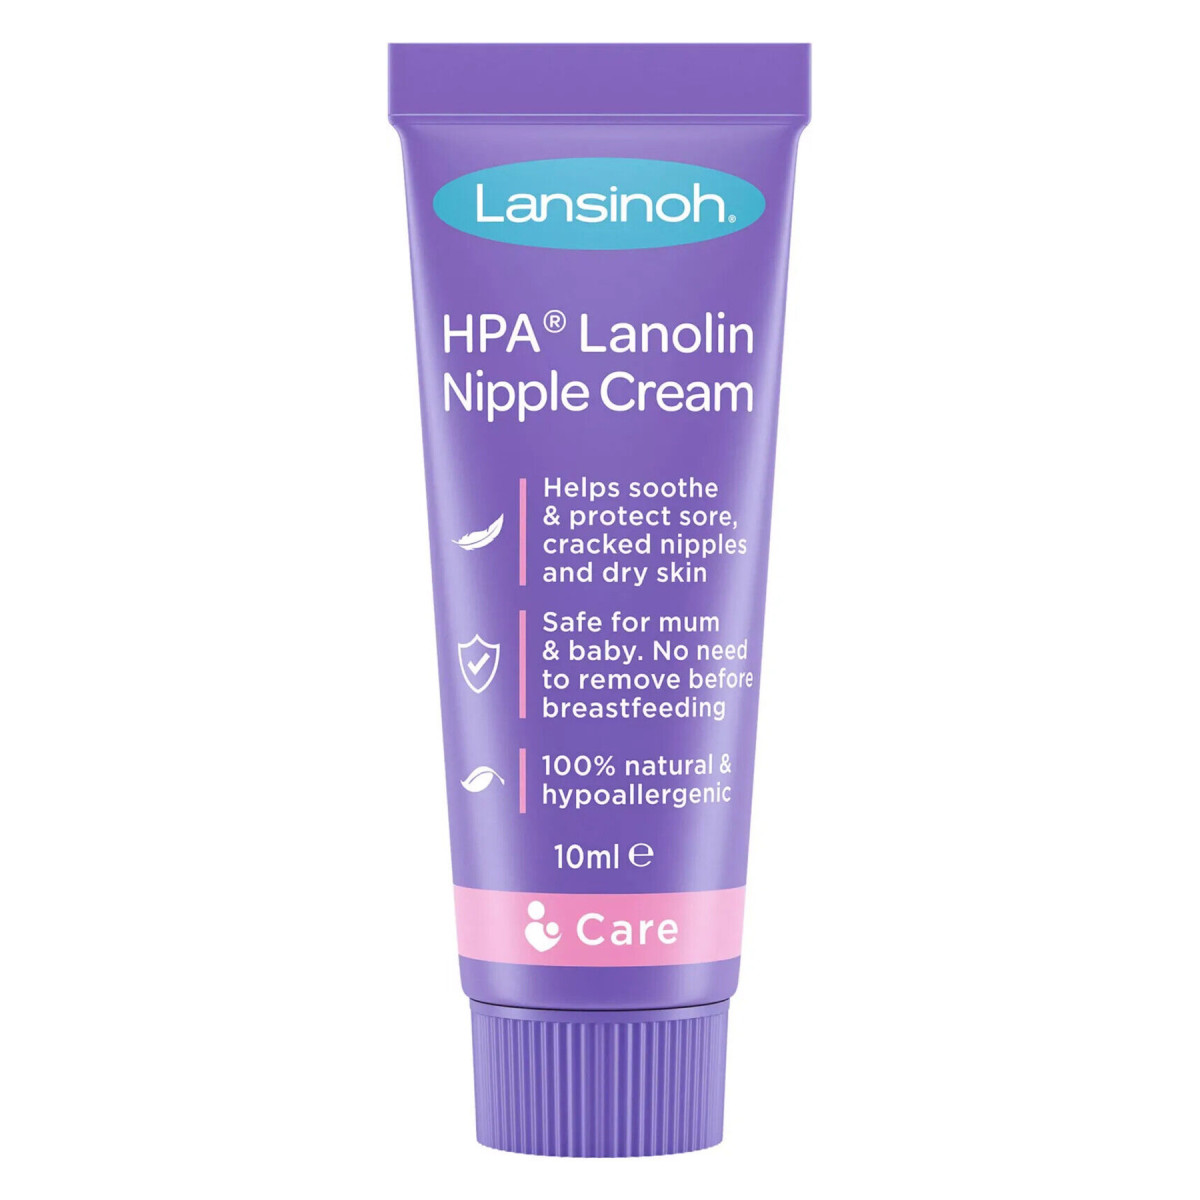 Lansinoh HPA Lanolin Nipple Cream is less sticky than Ameda Triple Zero Lanolin